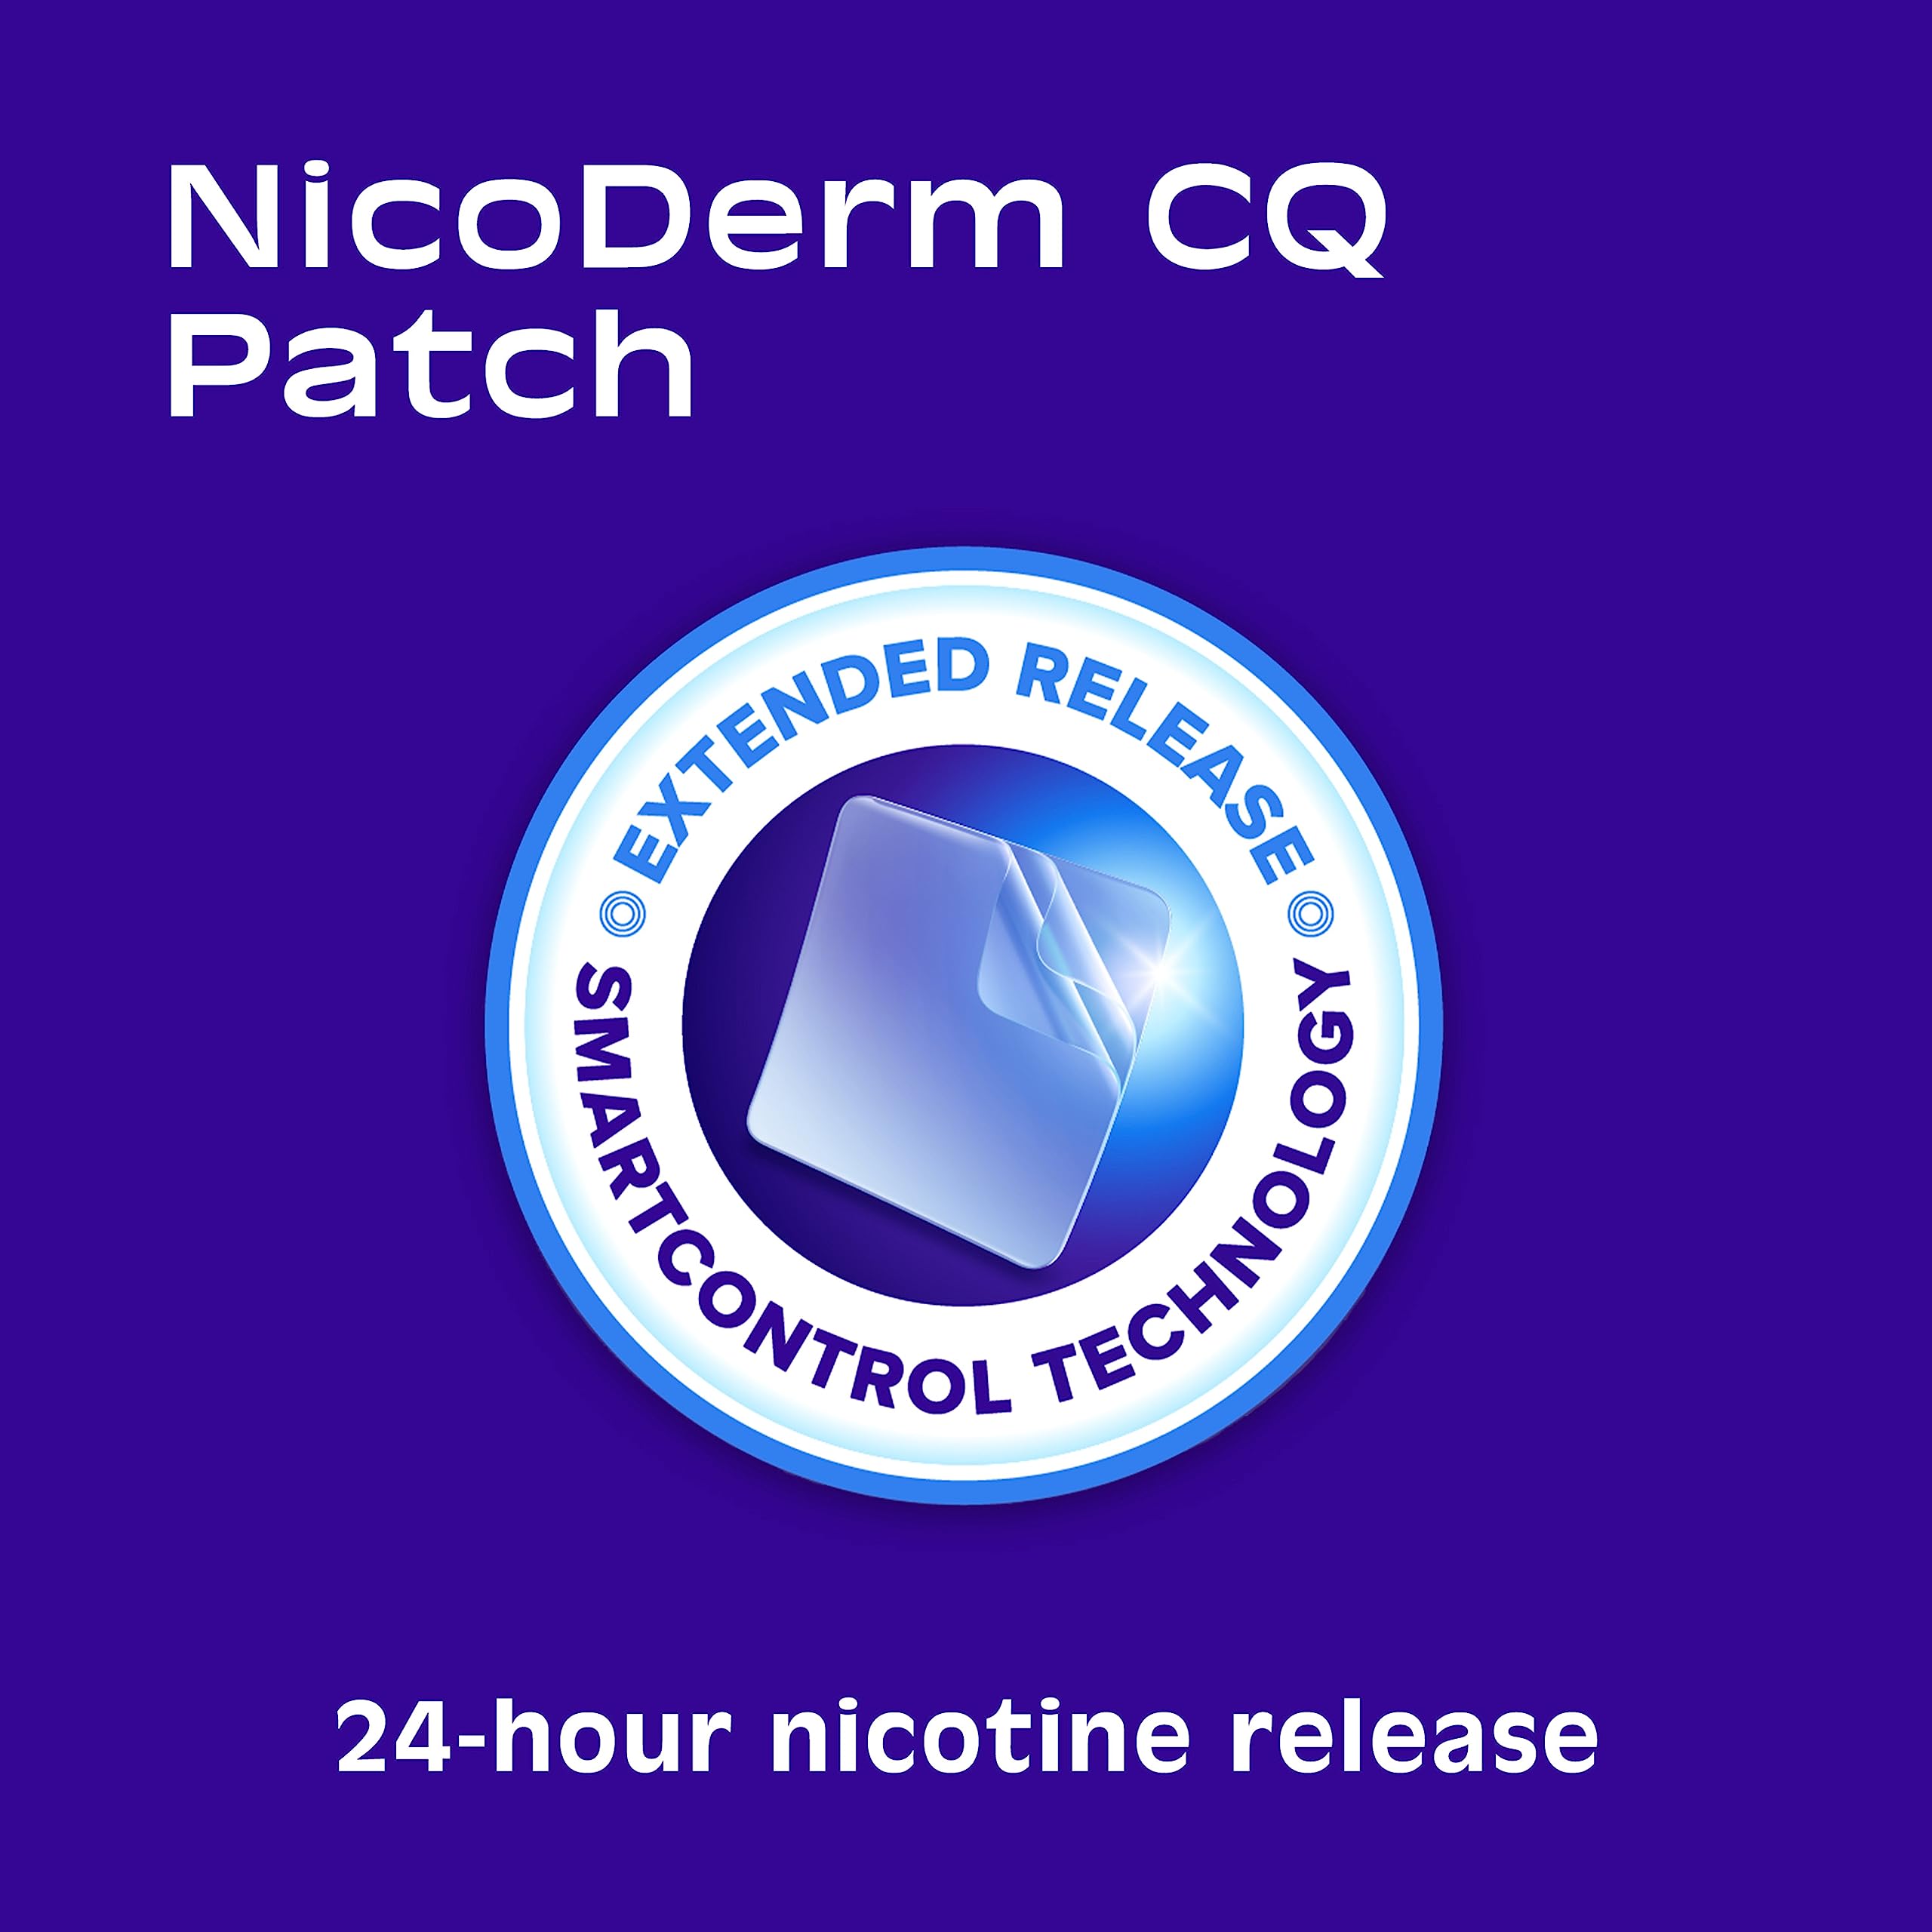 NicoDerm Patches